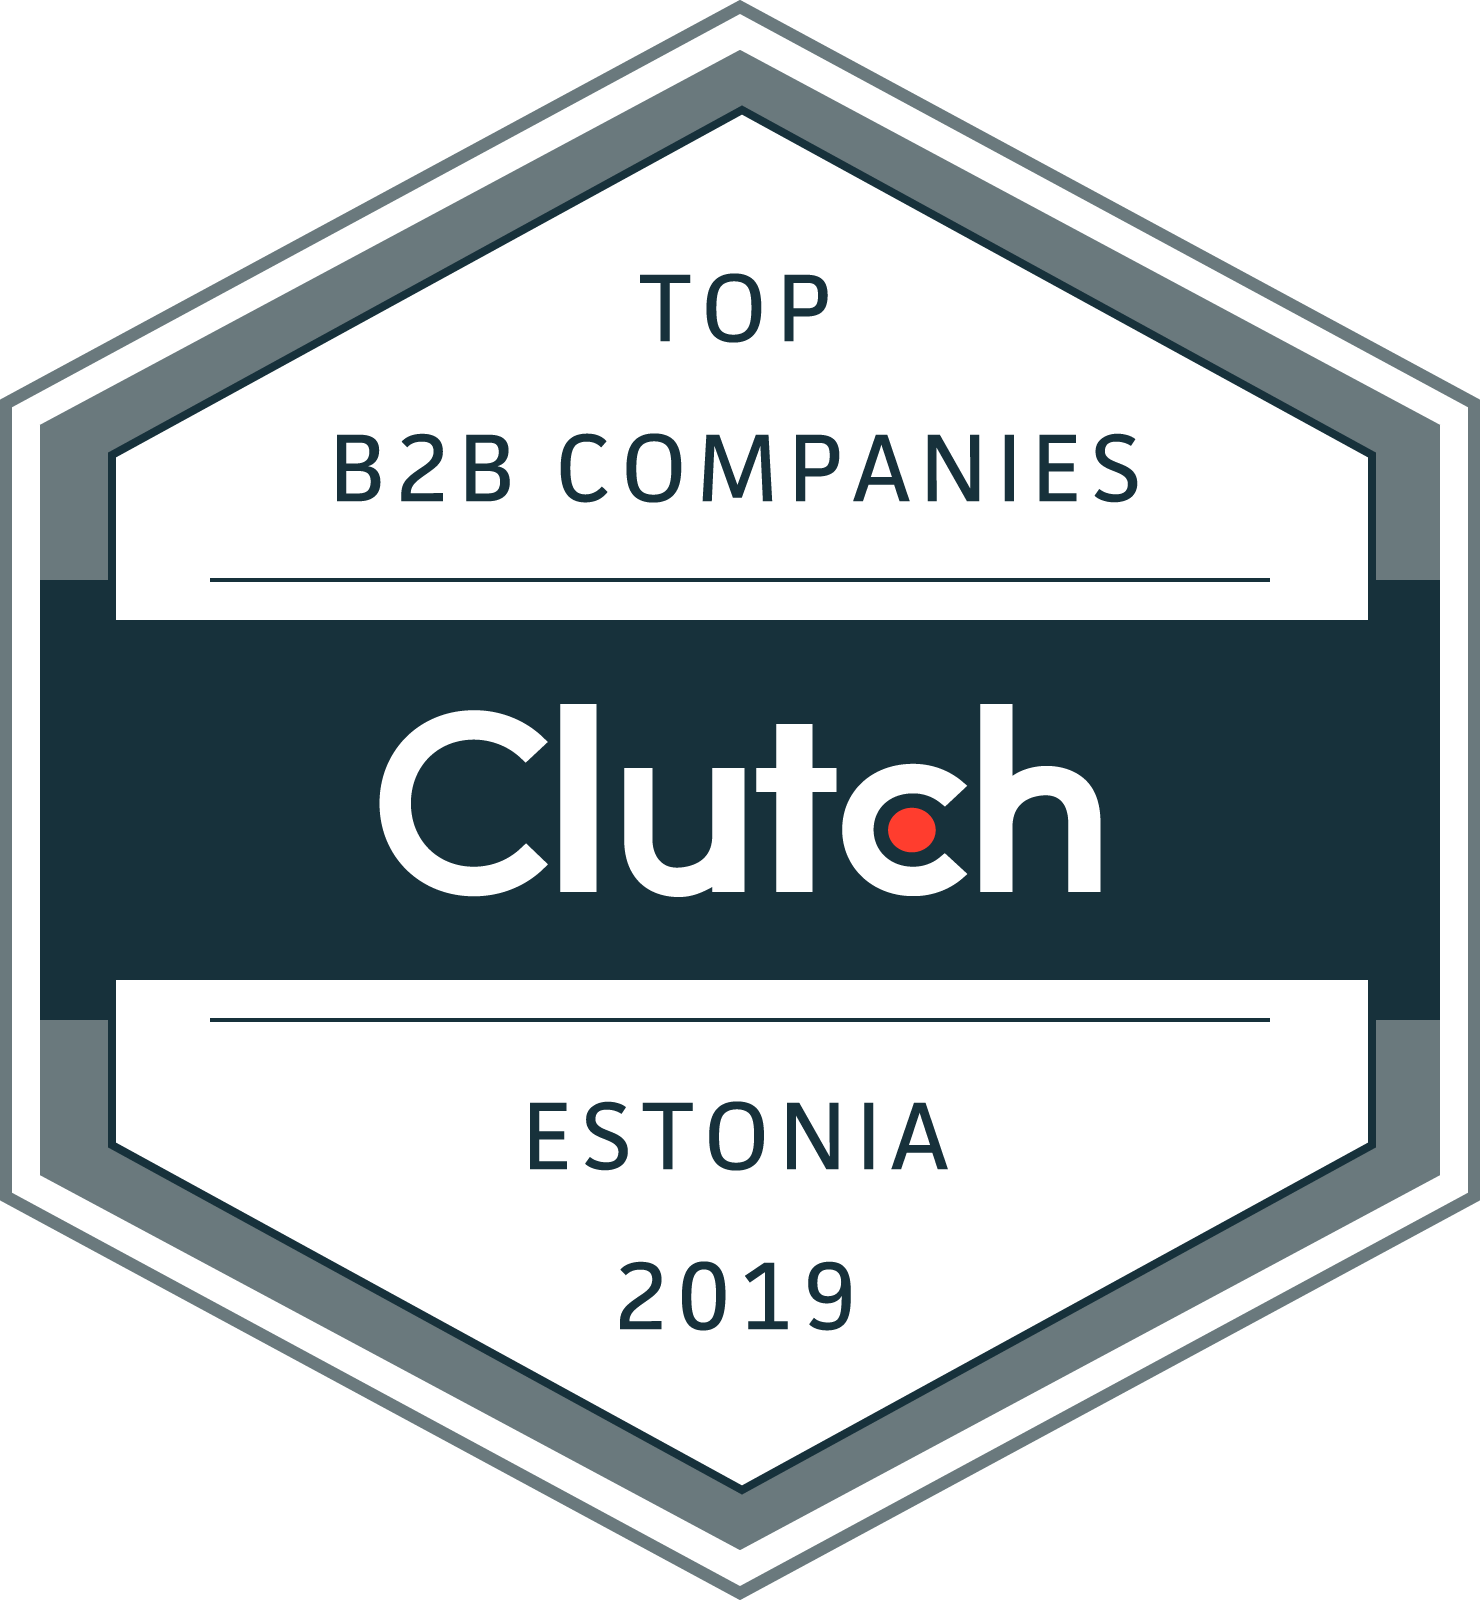 Estonia_B2B_Companies_2019